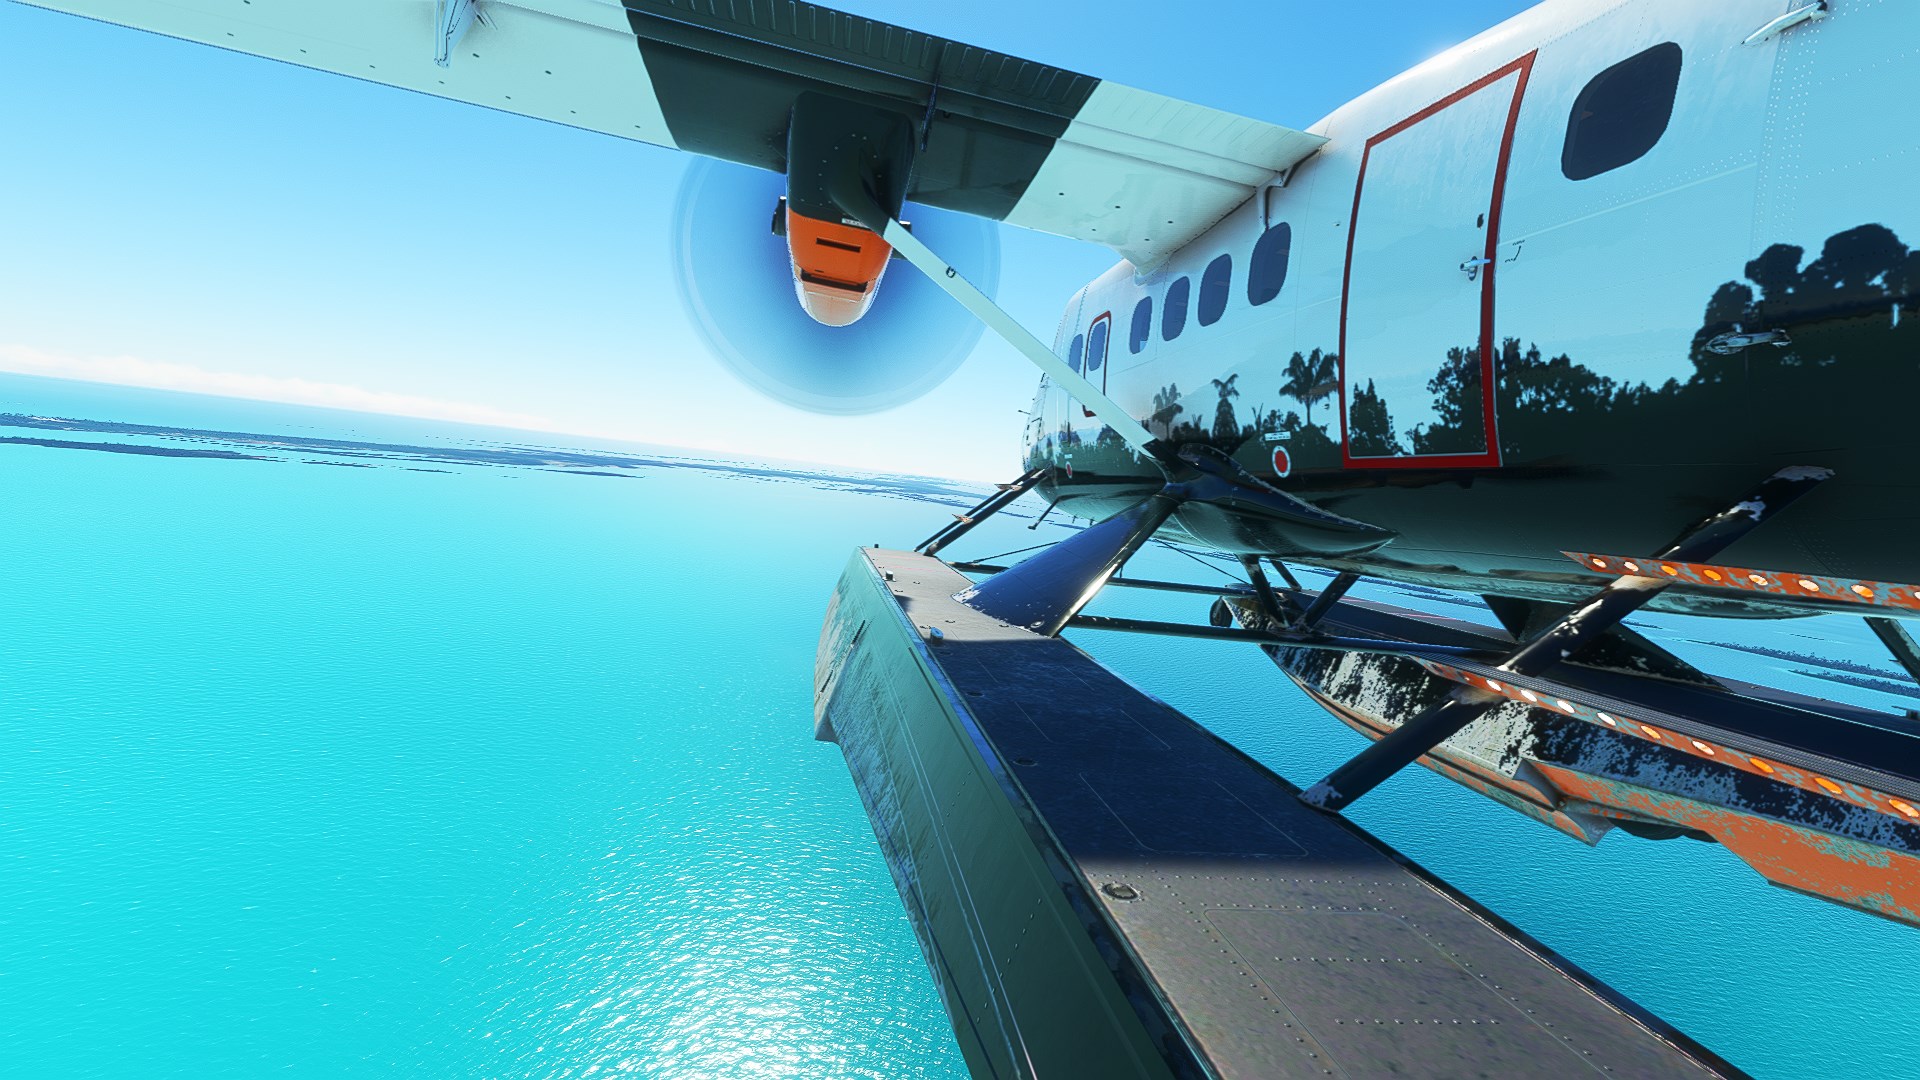 The best locations to explore in Microsoft Flight Simulator